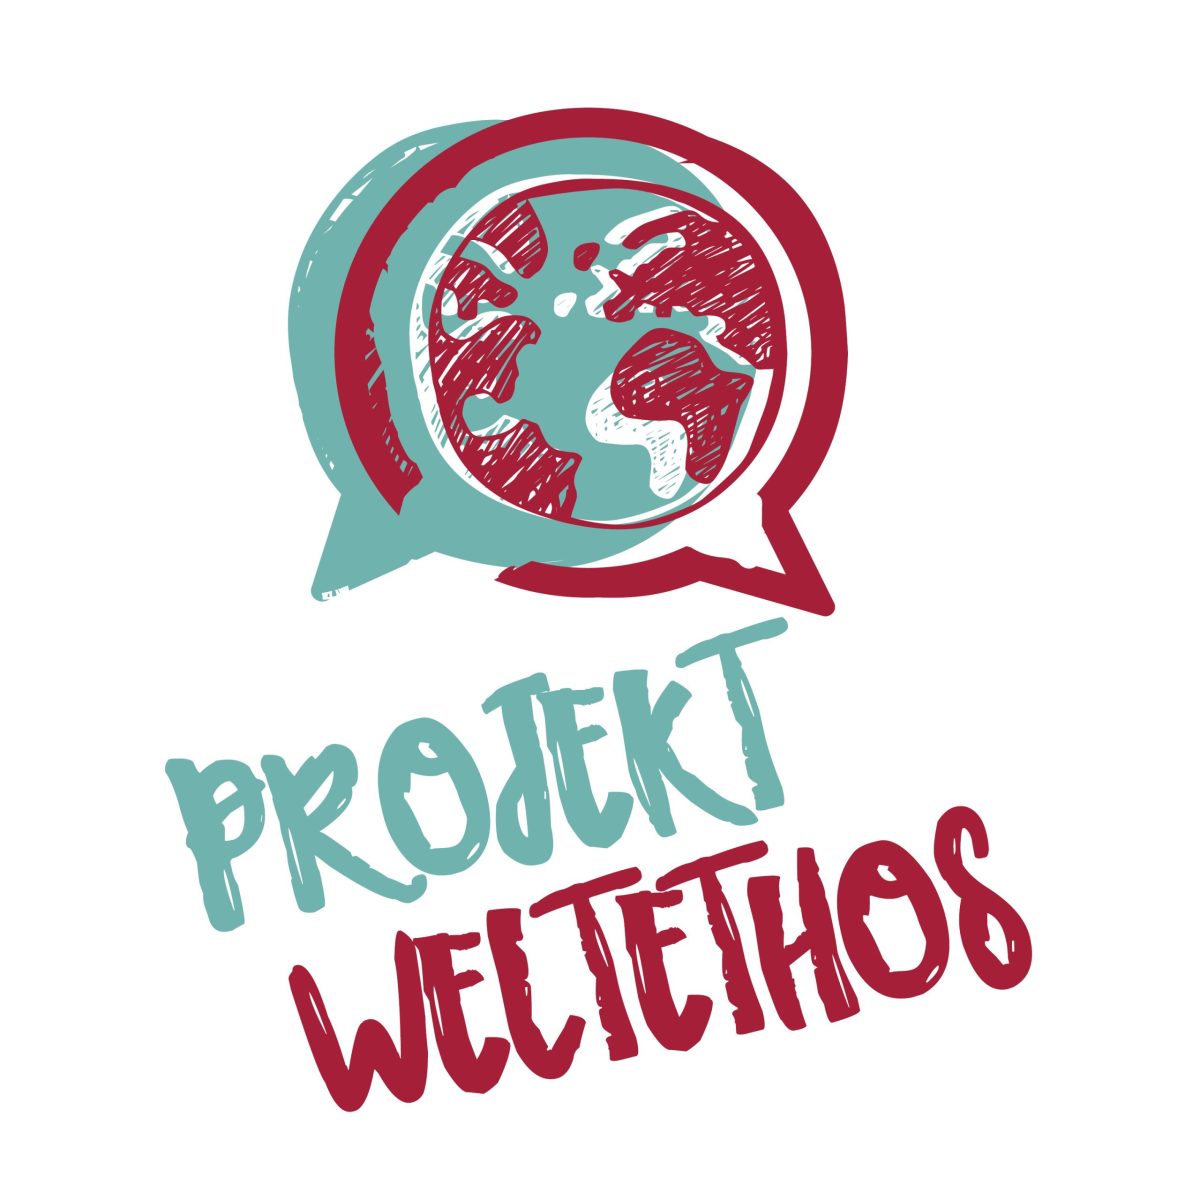 ProjektWeltethos